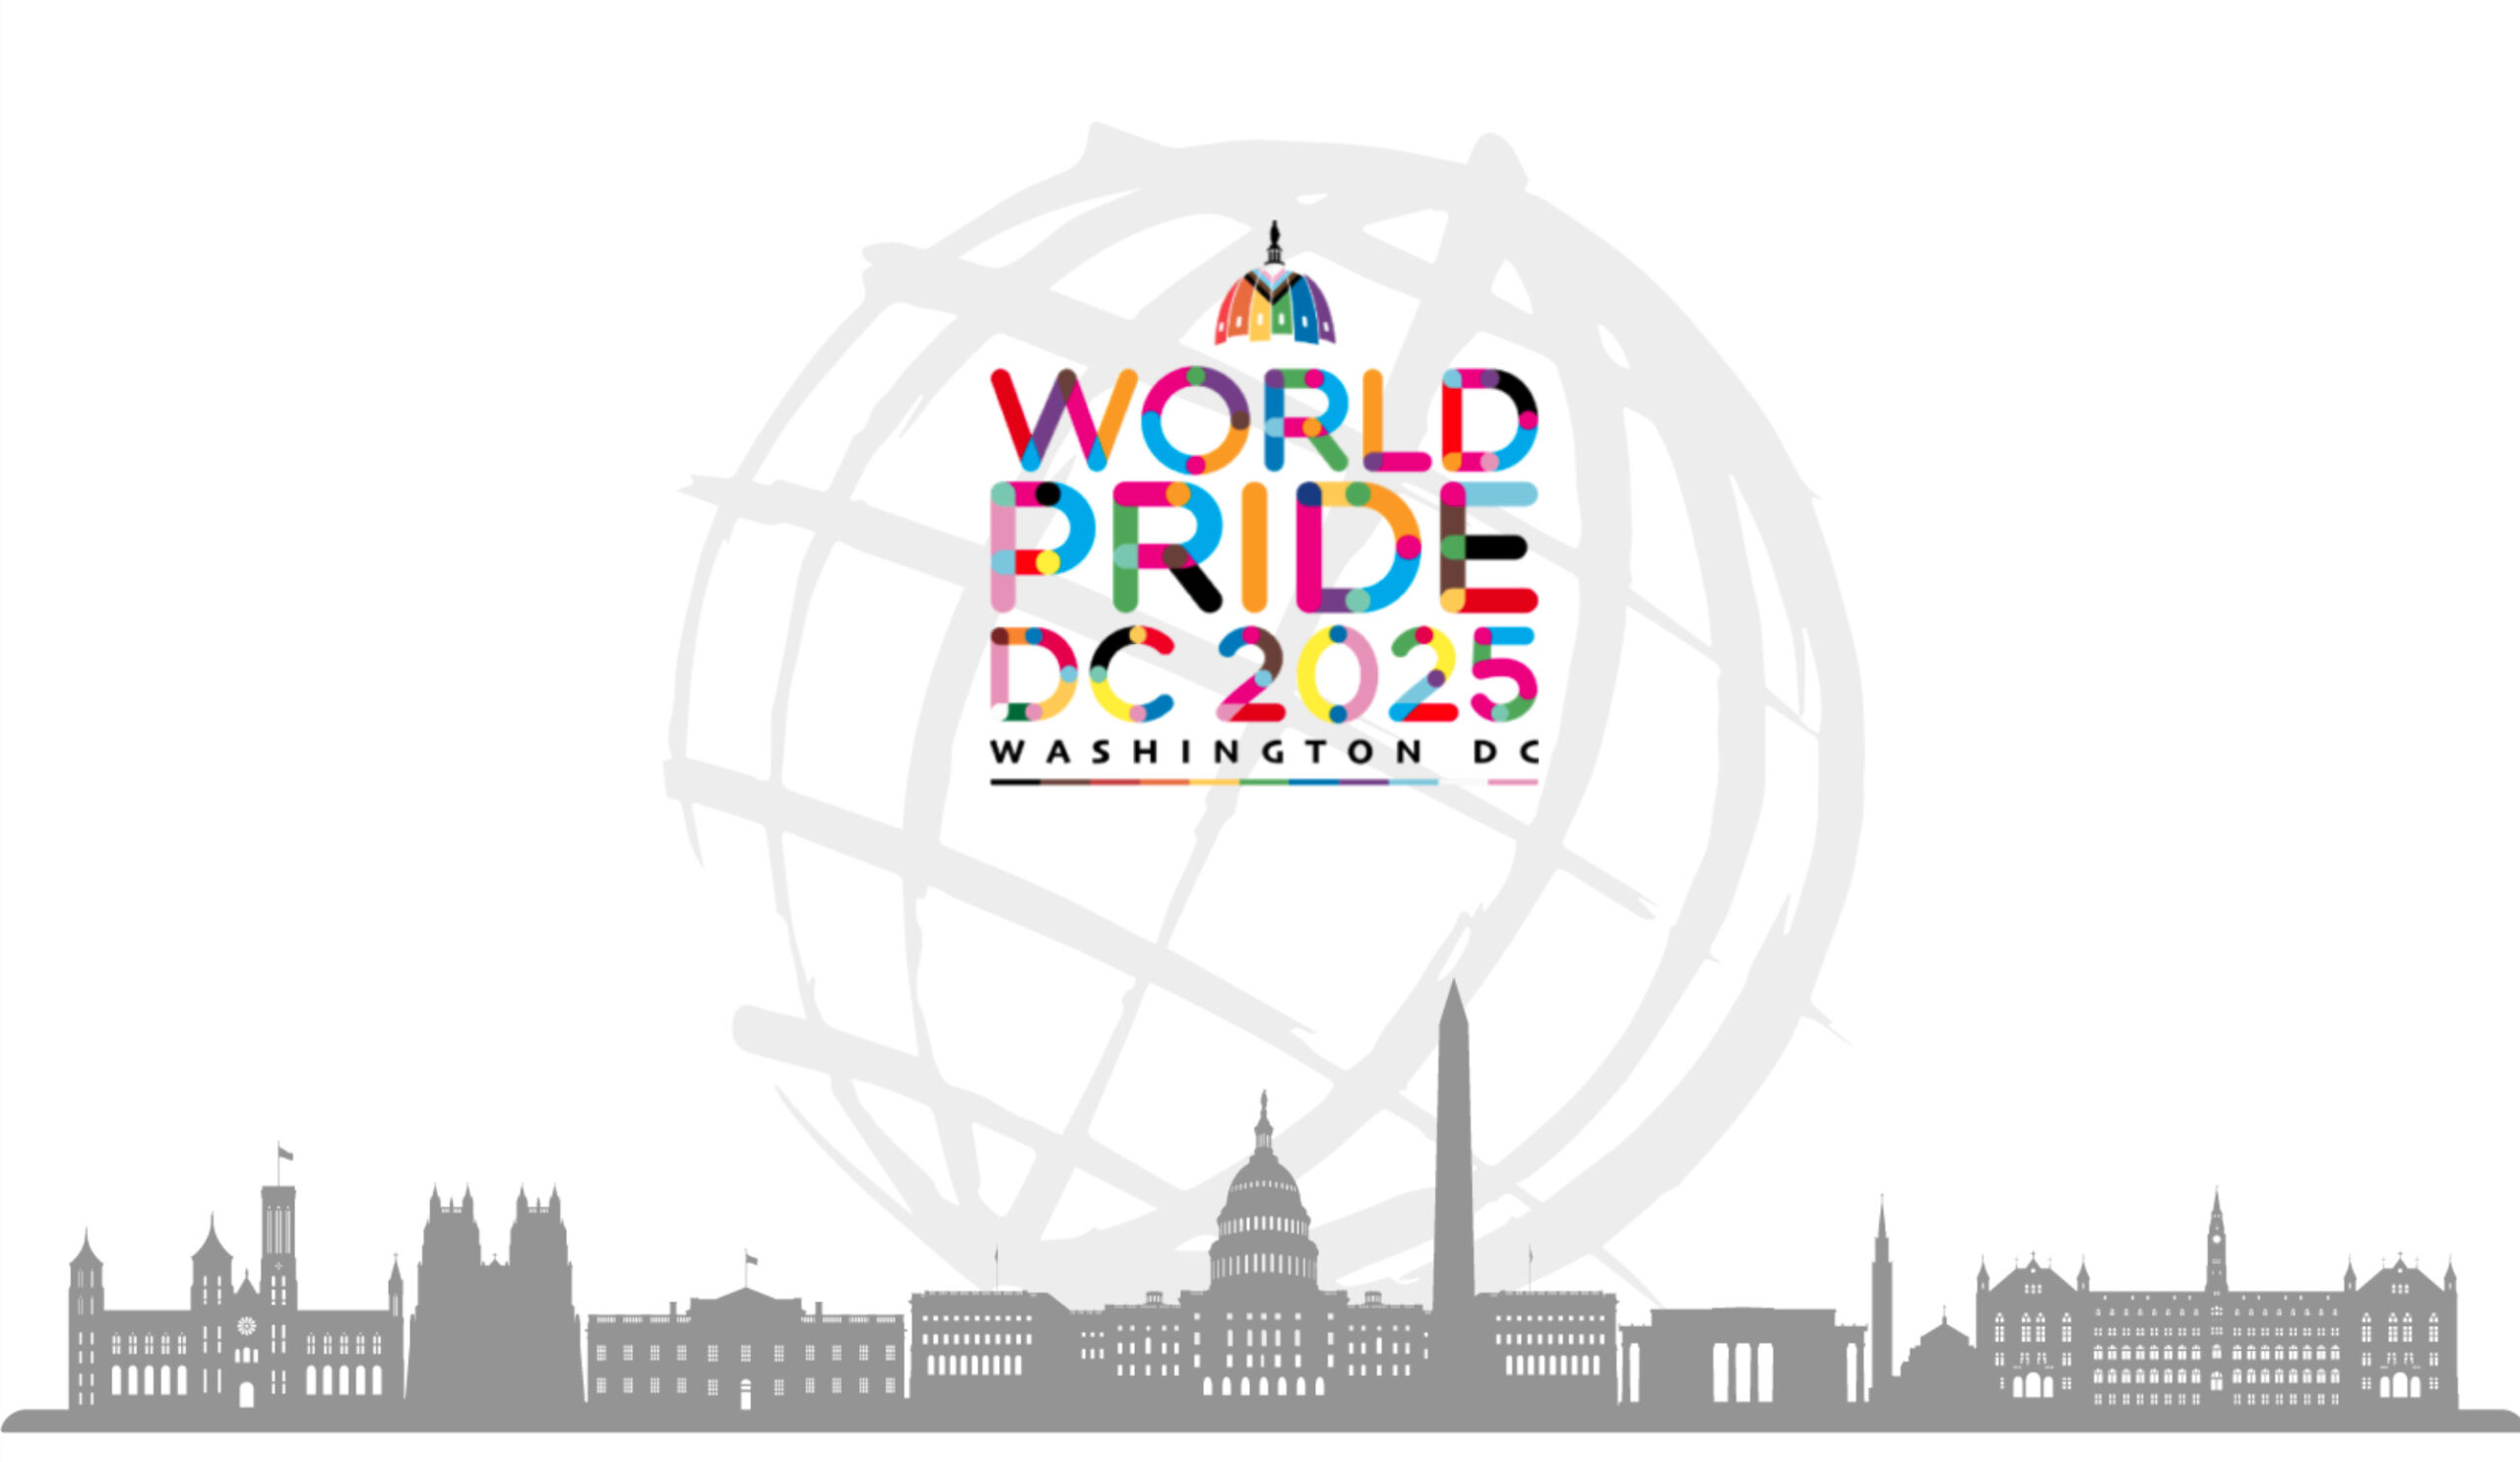 Washington, DC to Host WorldPride 2025